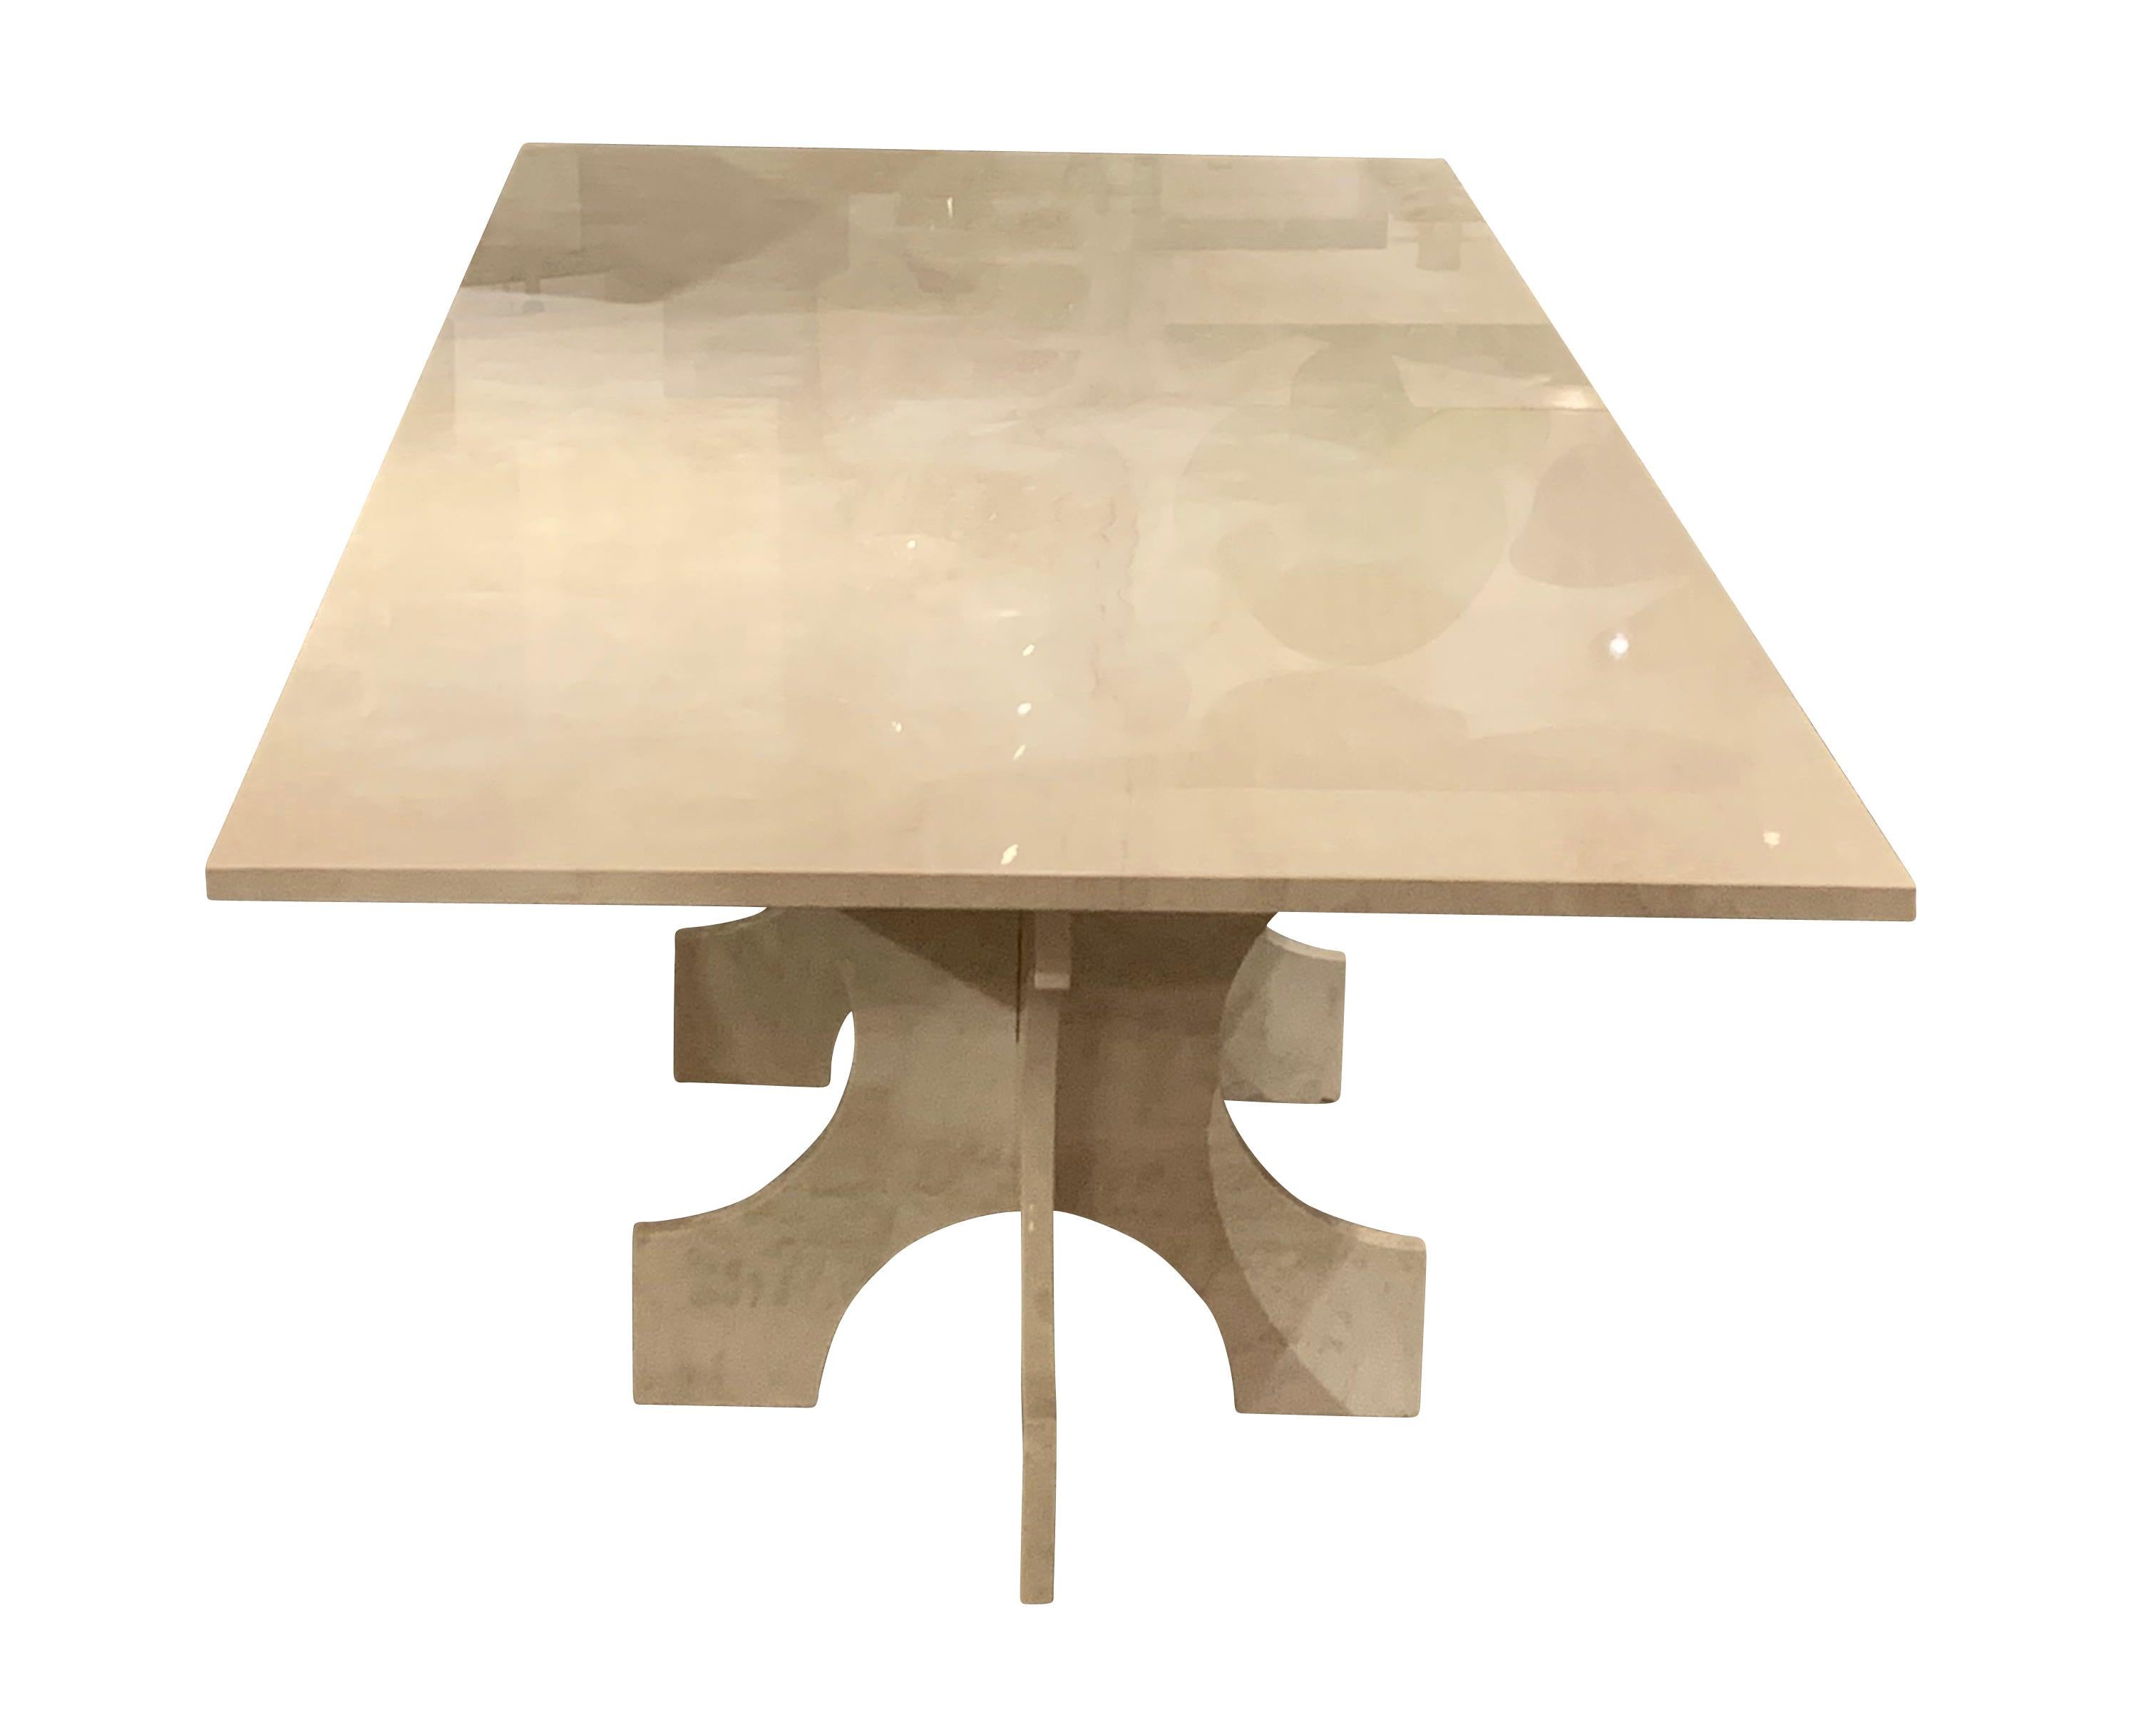 Polished Bespoke White Travertine Dining Table, United States, Contemporary